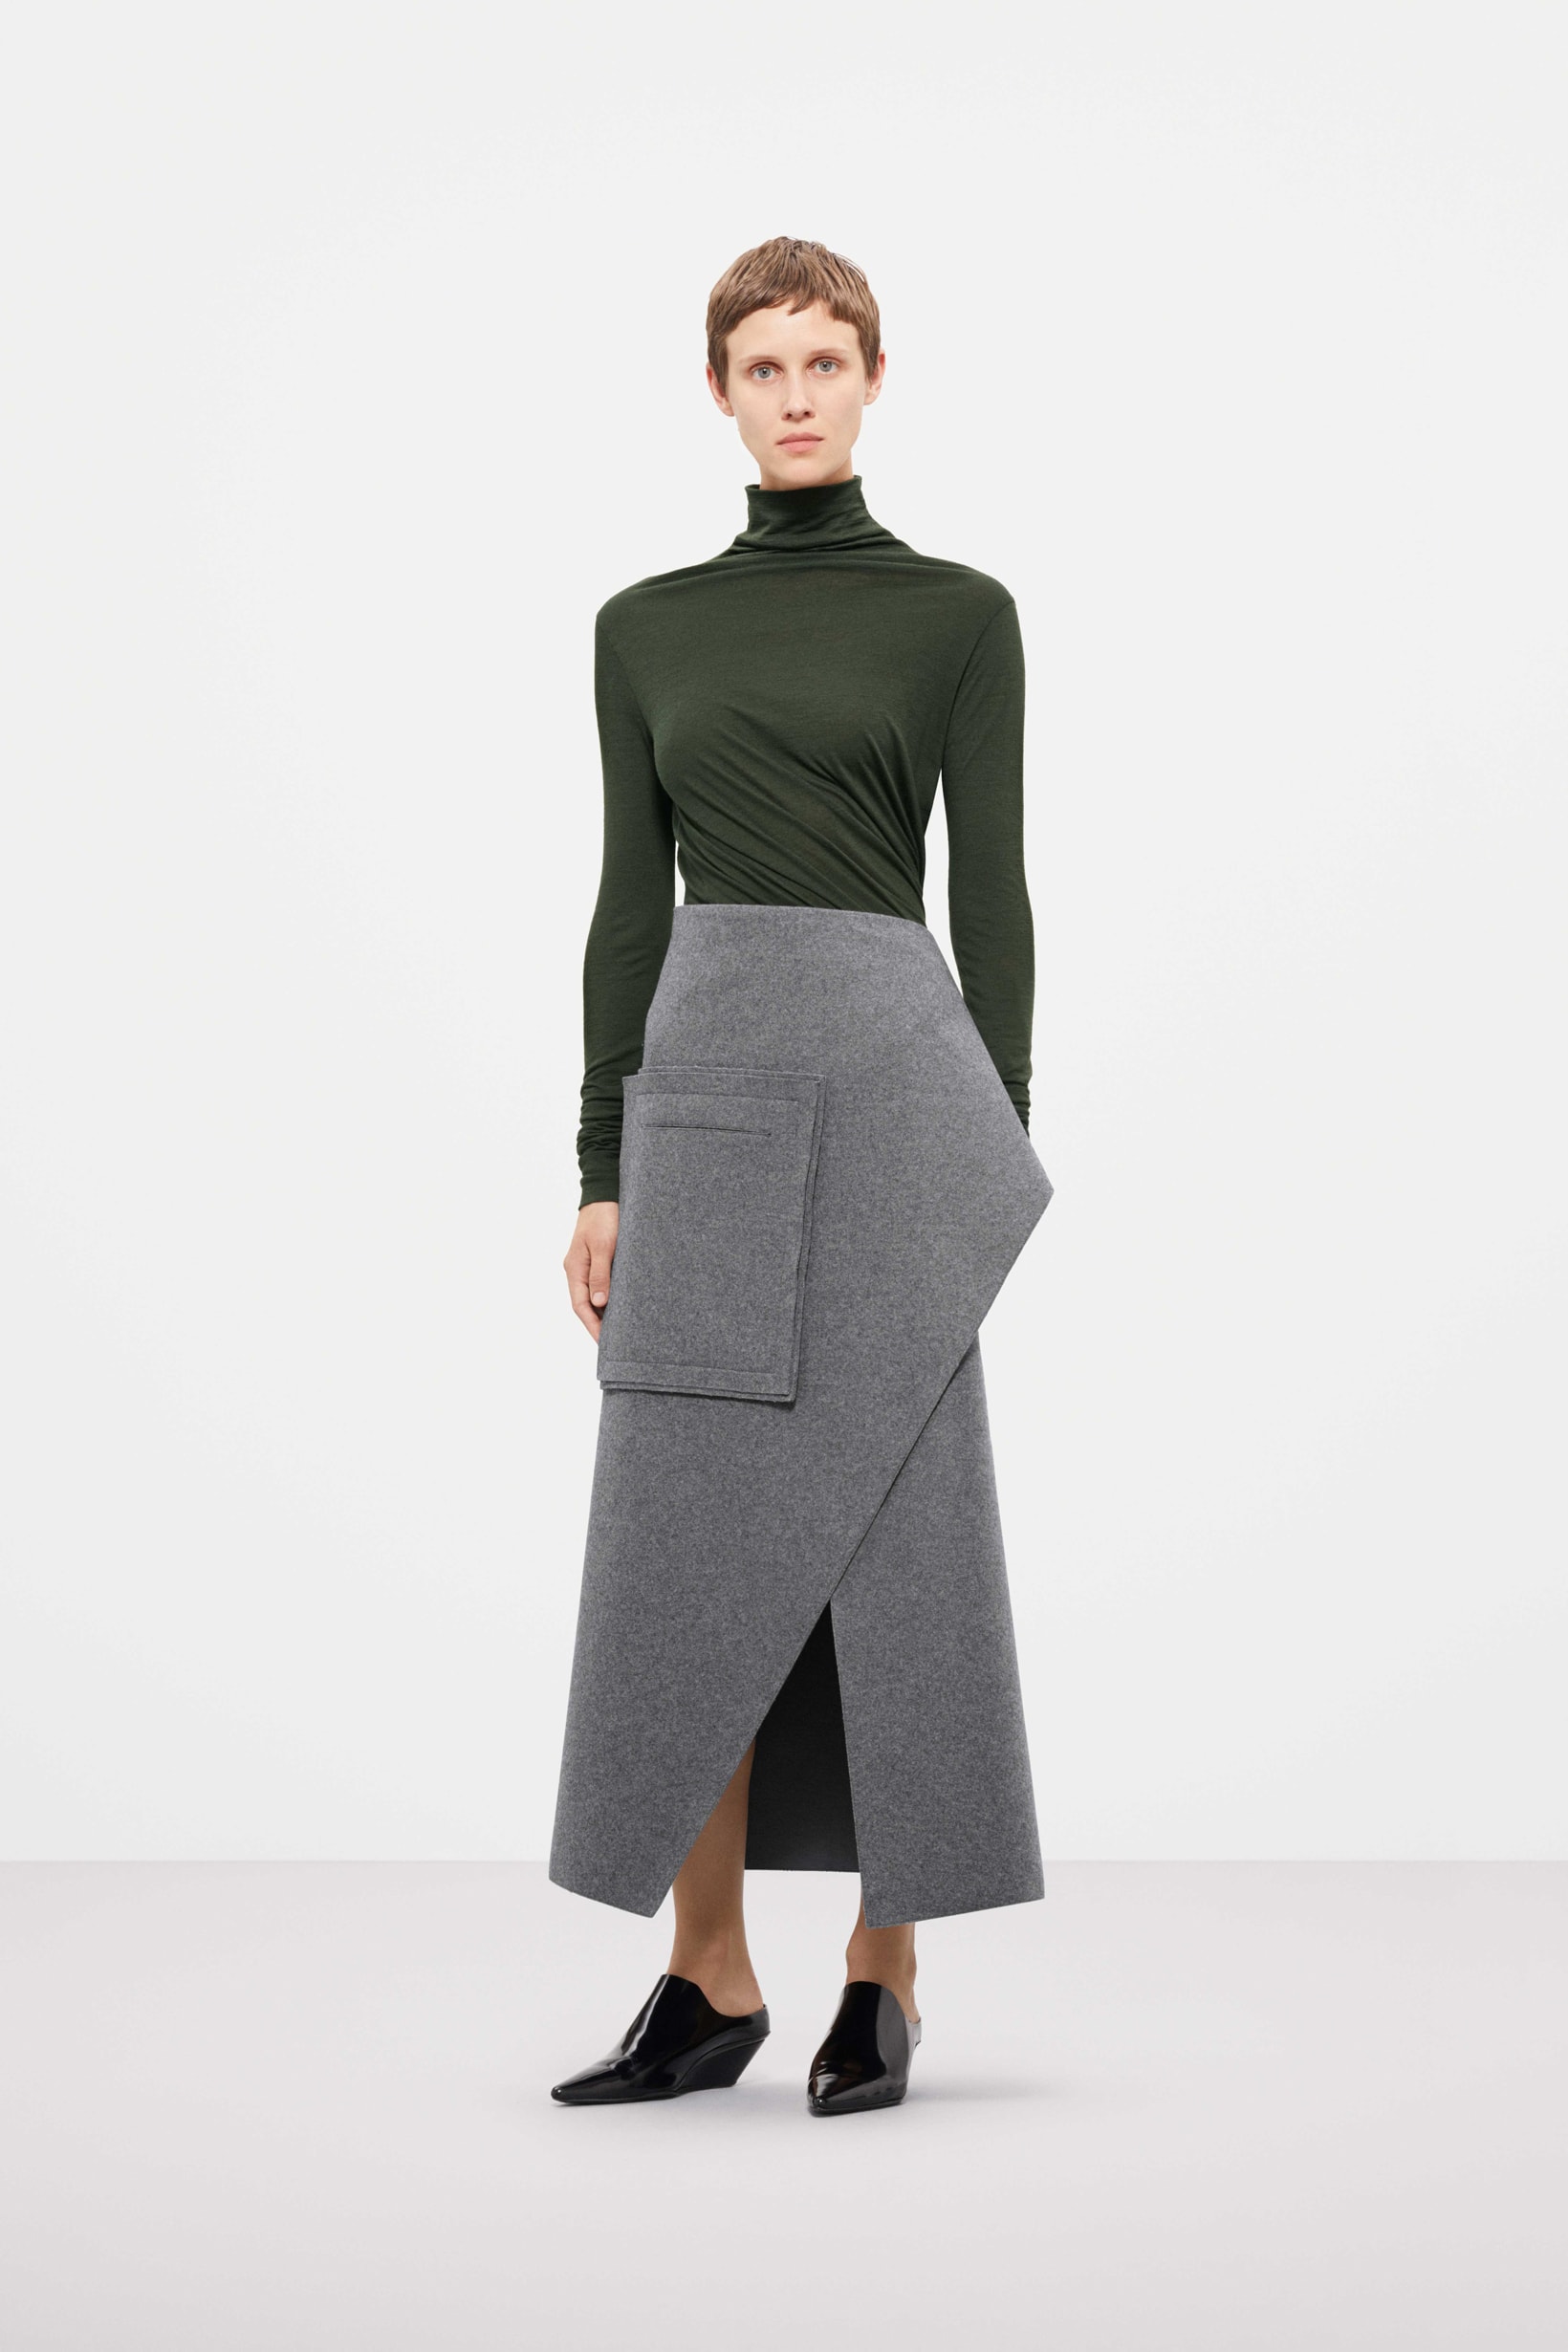 Cos Fall Winter 2019 Lookbook Top Black Skirt Grey